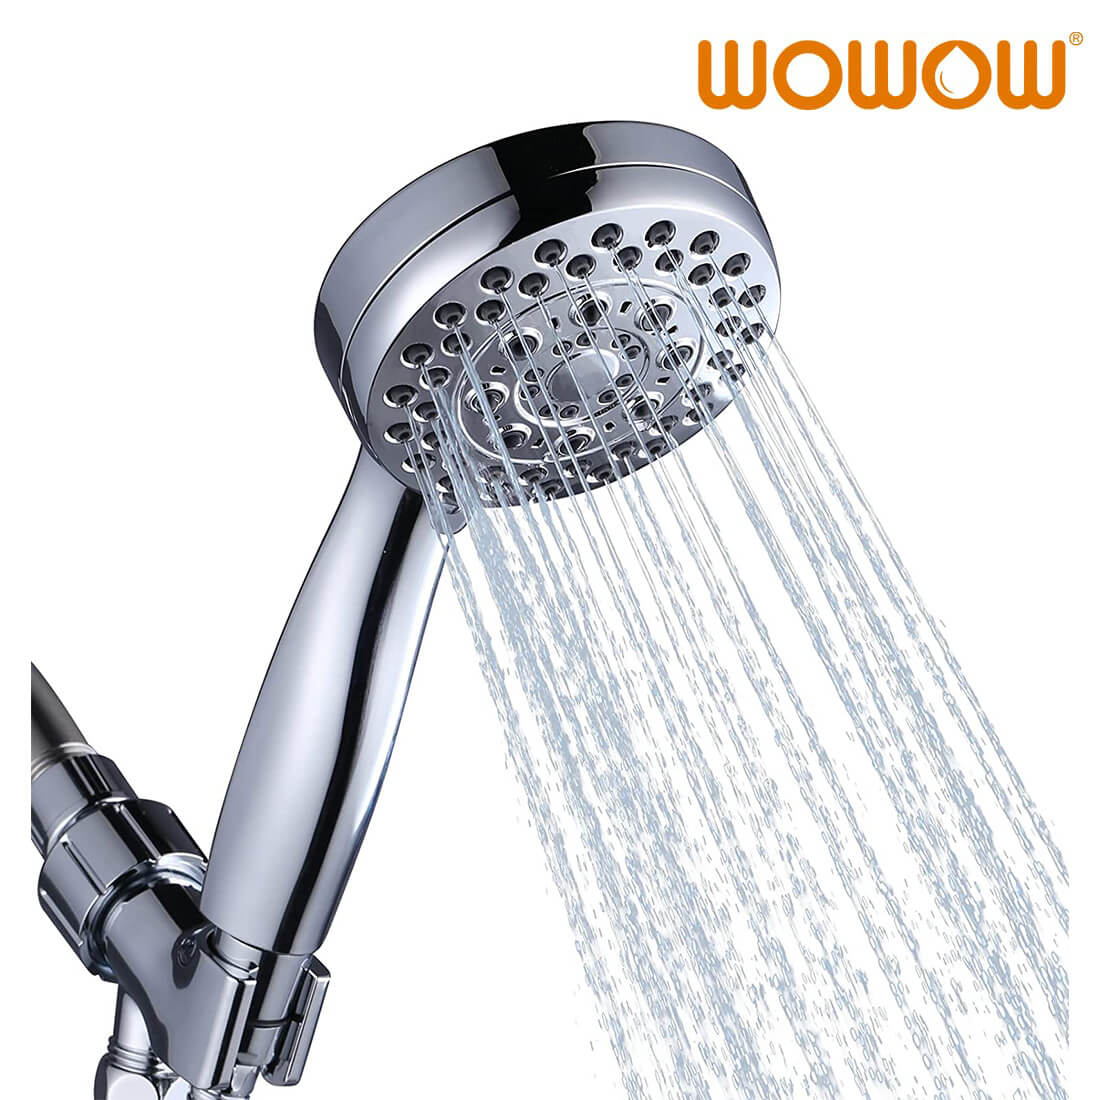 wowow high pressure 5 setting chrome shower head with handheld